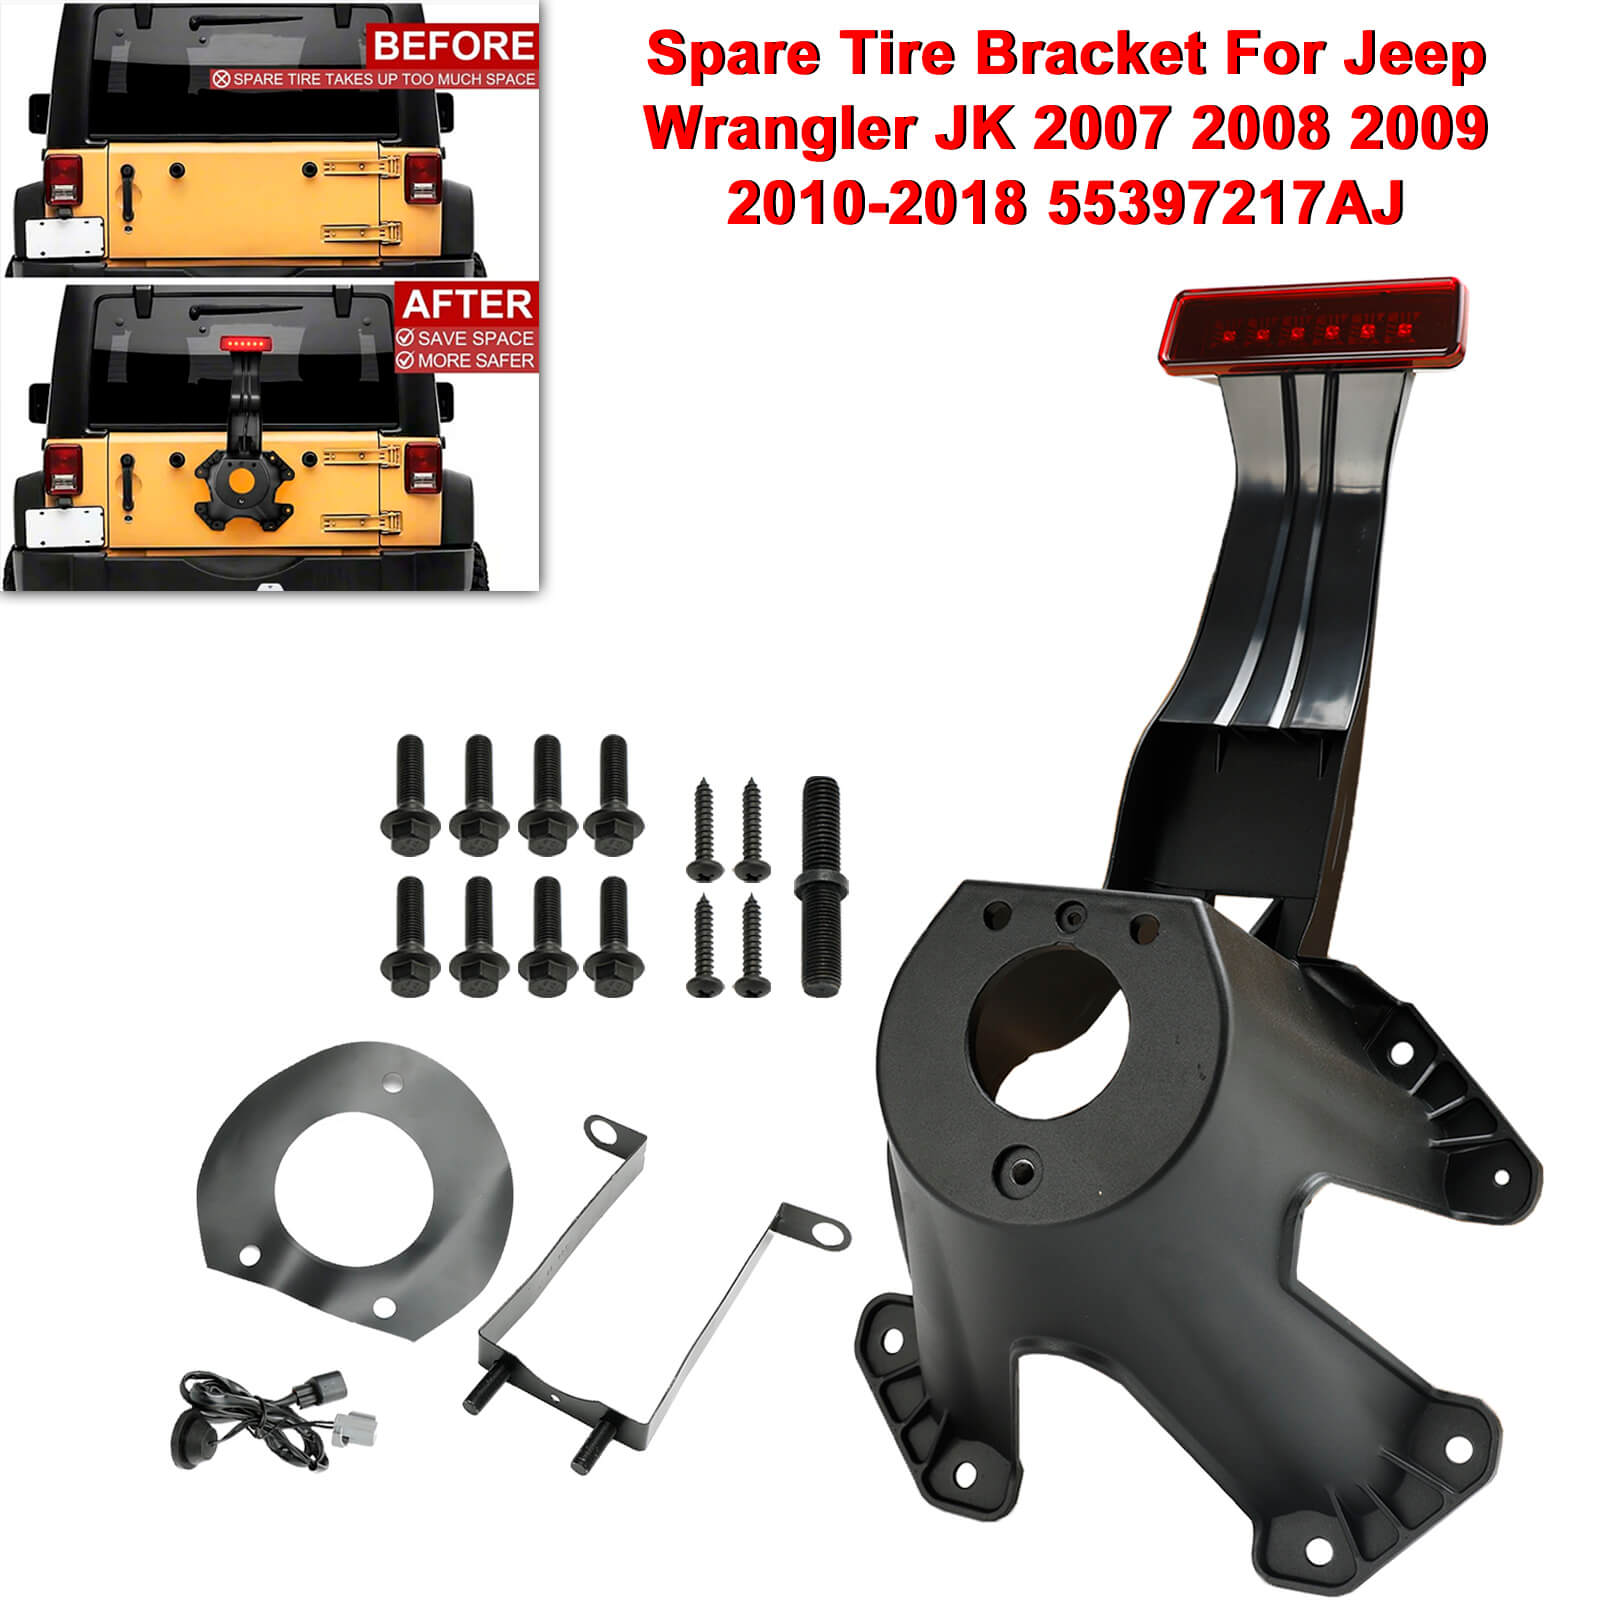 Spare Tire Bracket For Jeep Wrangler JK 2007 2008 2009 2010-2018 55397217AJ